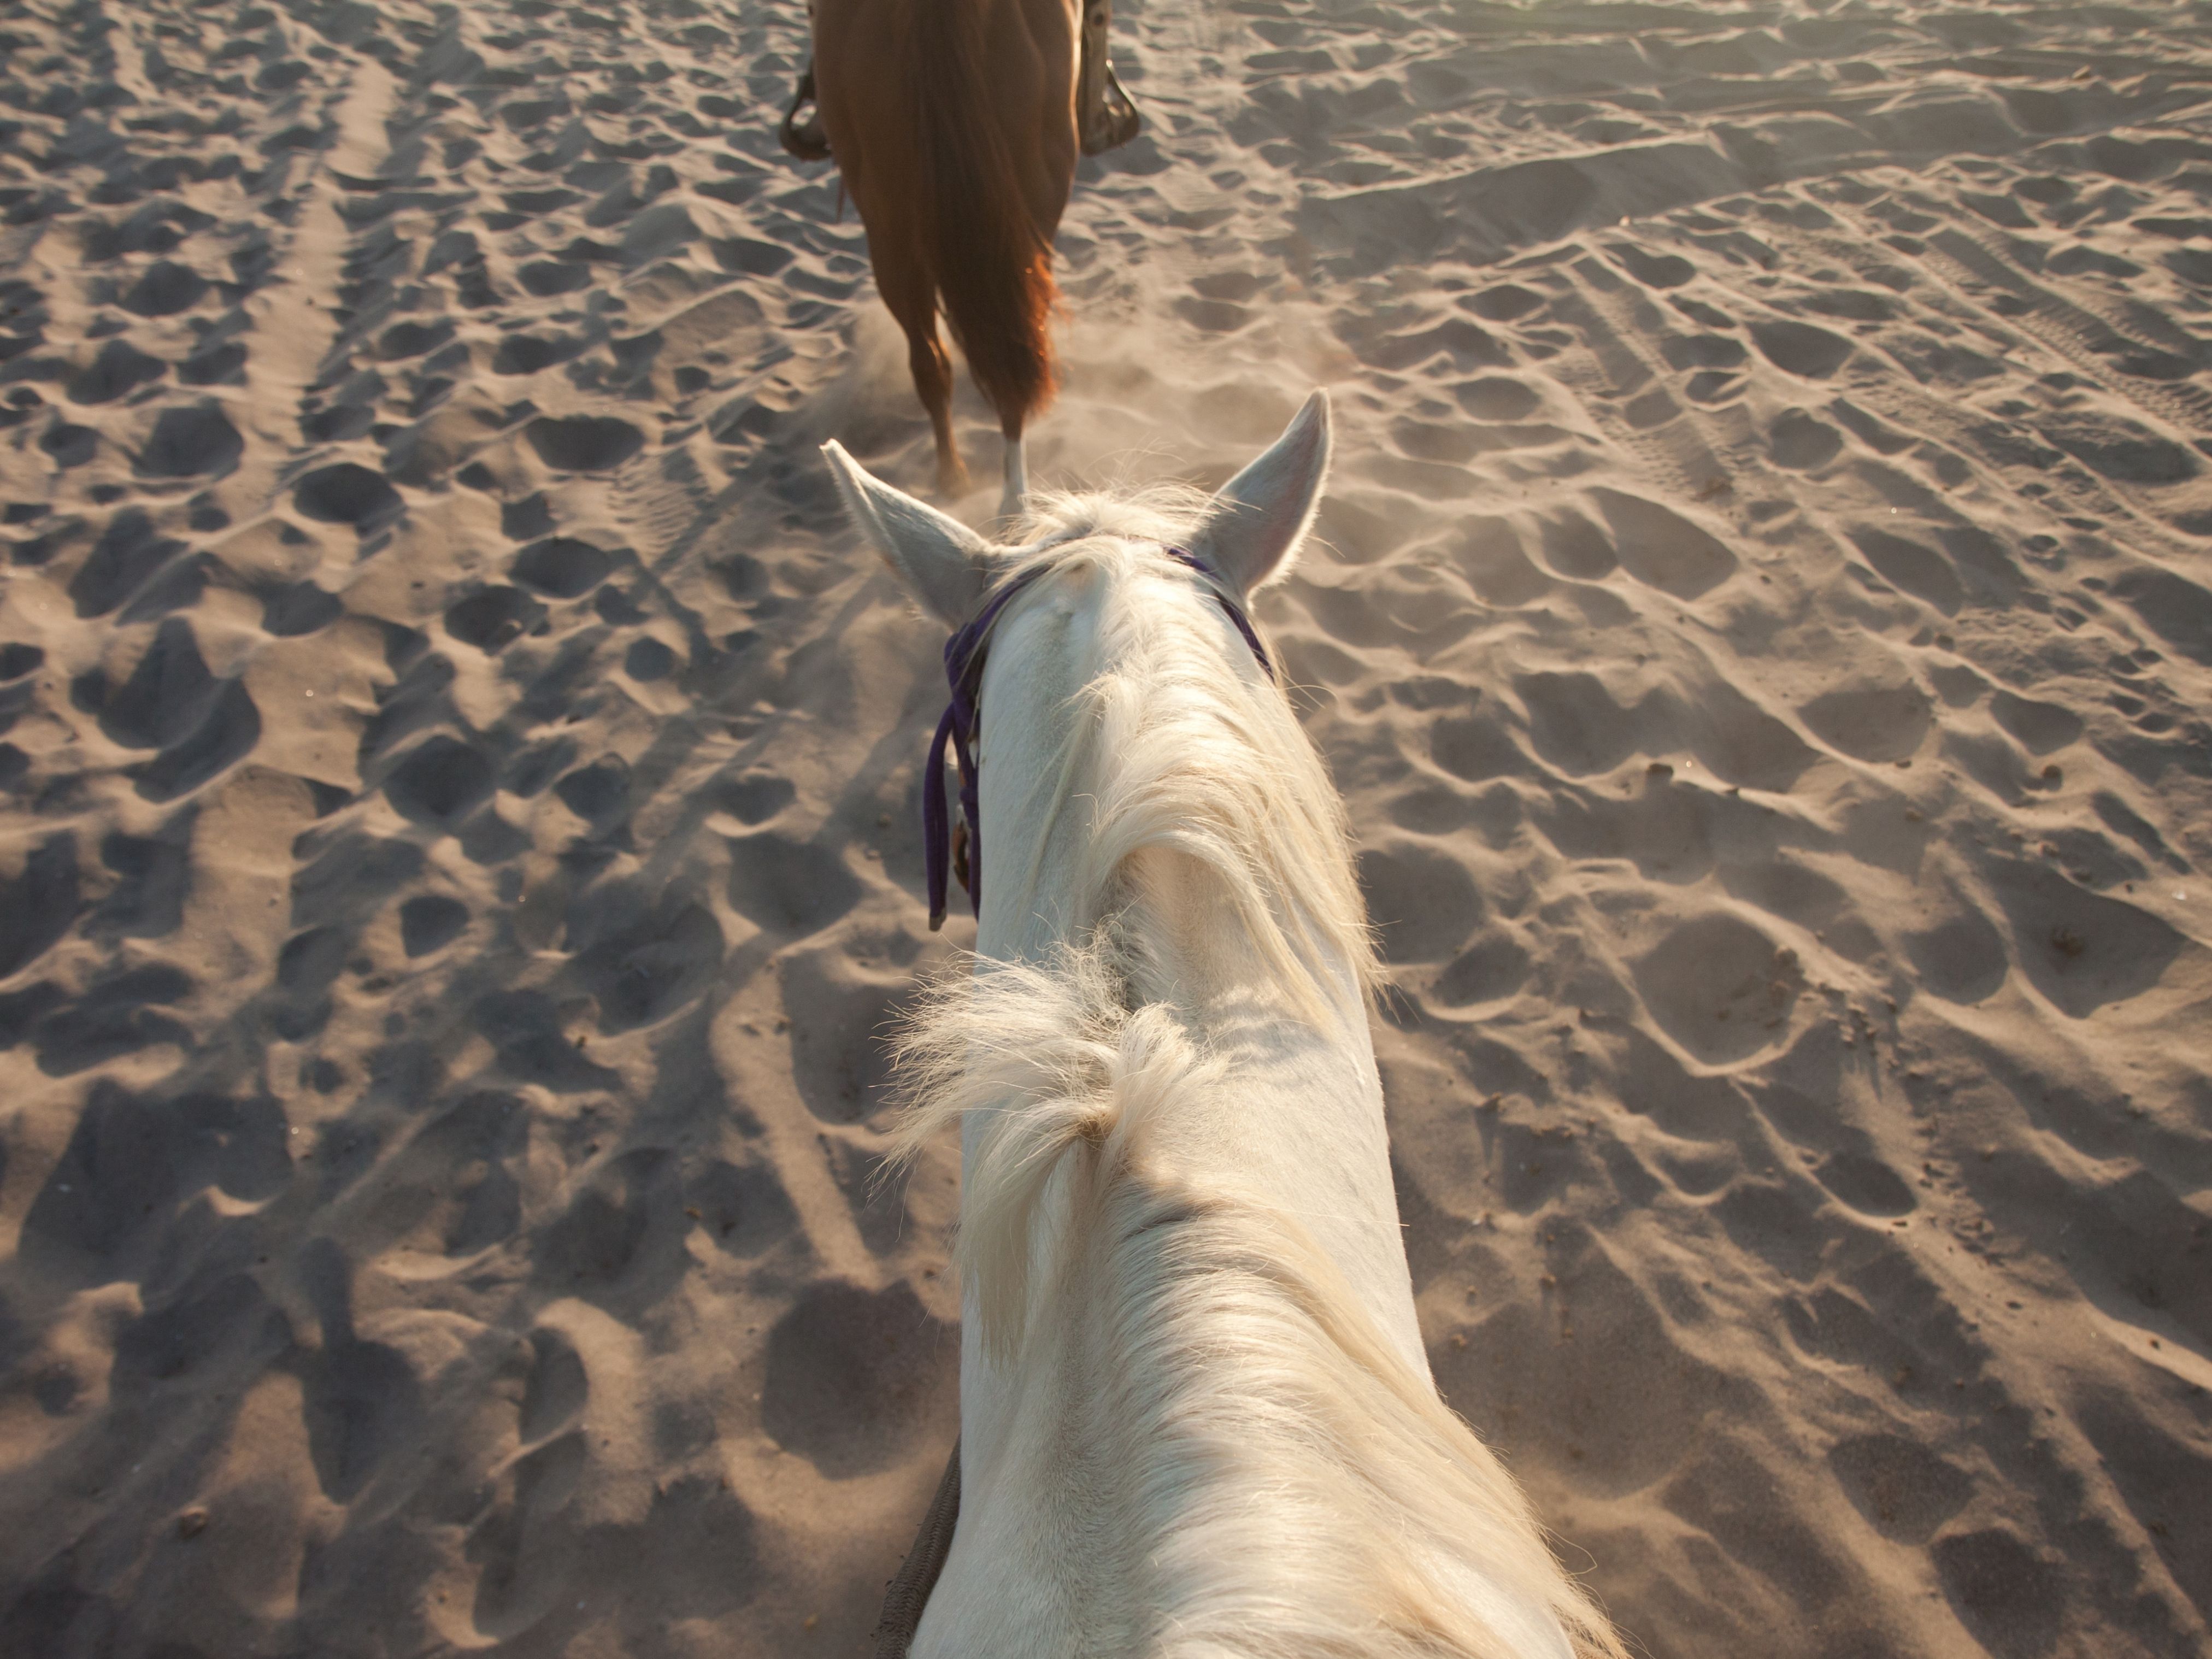 Horseback riding on the beach in Aruba